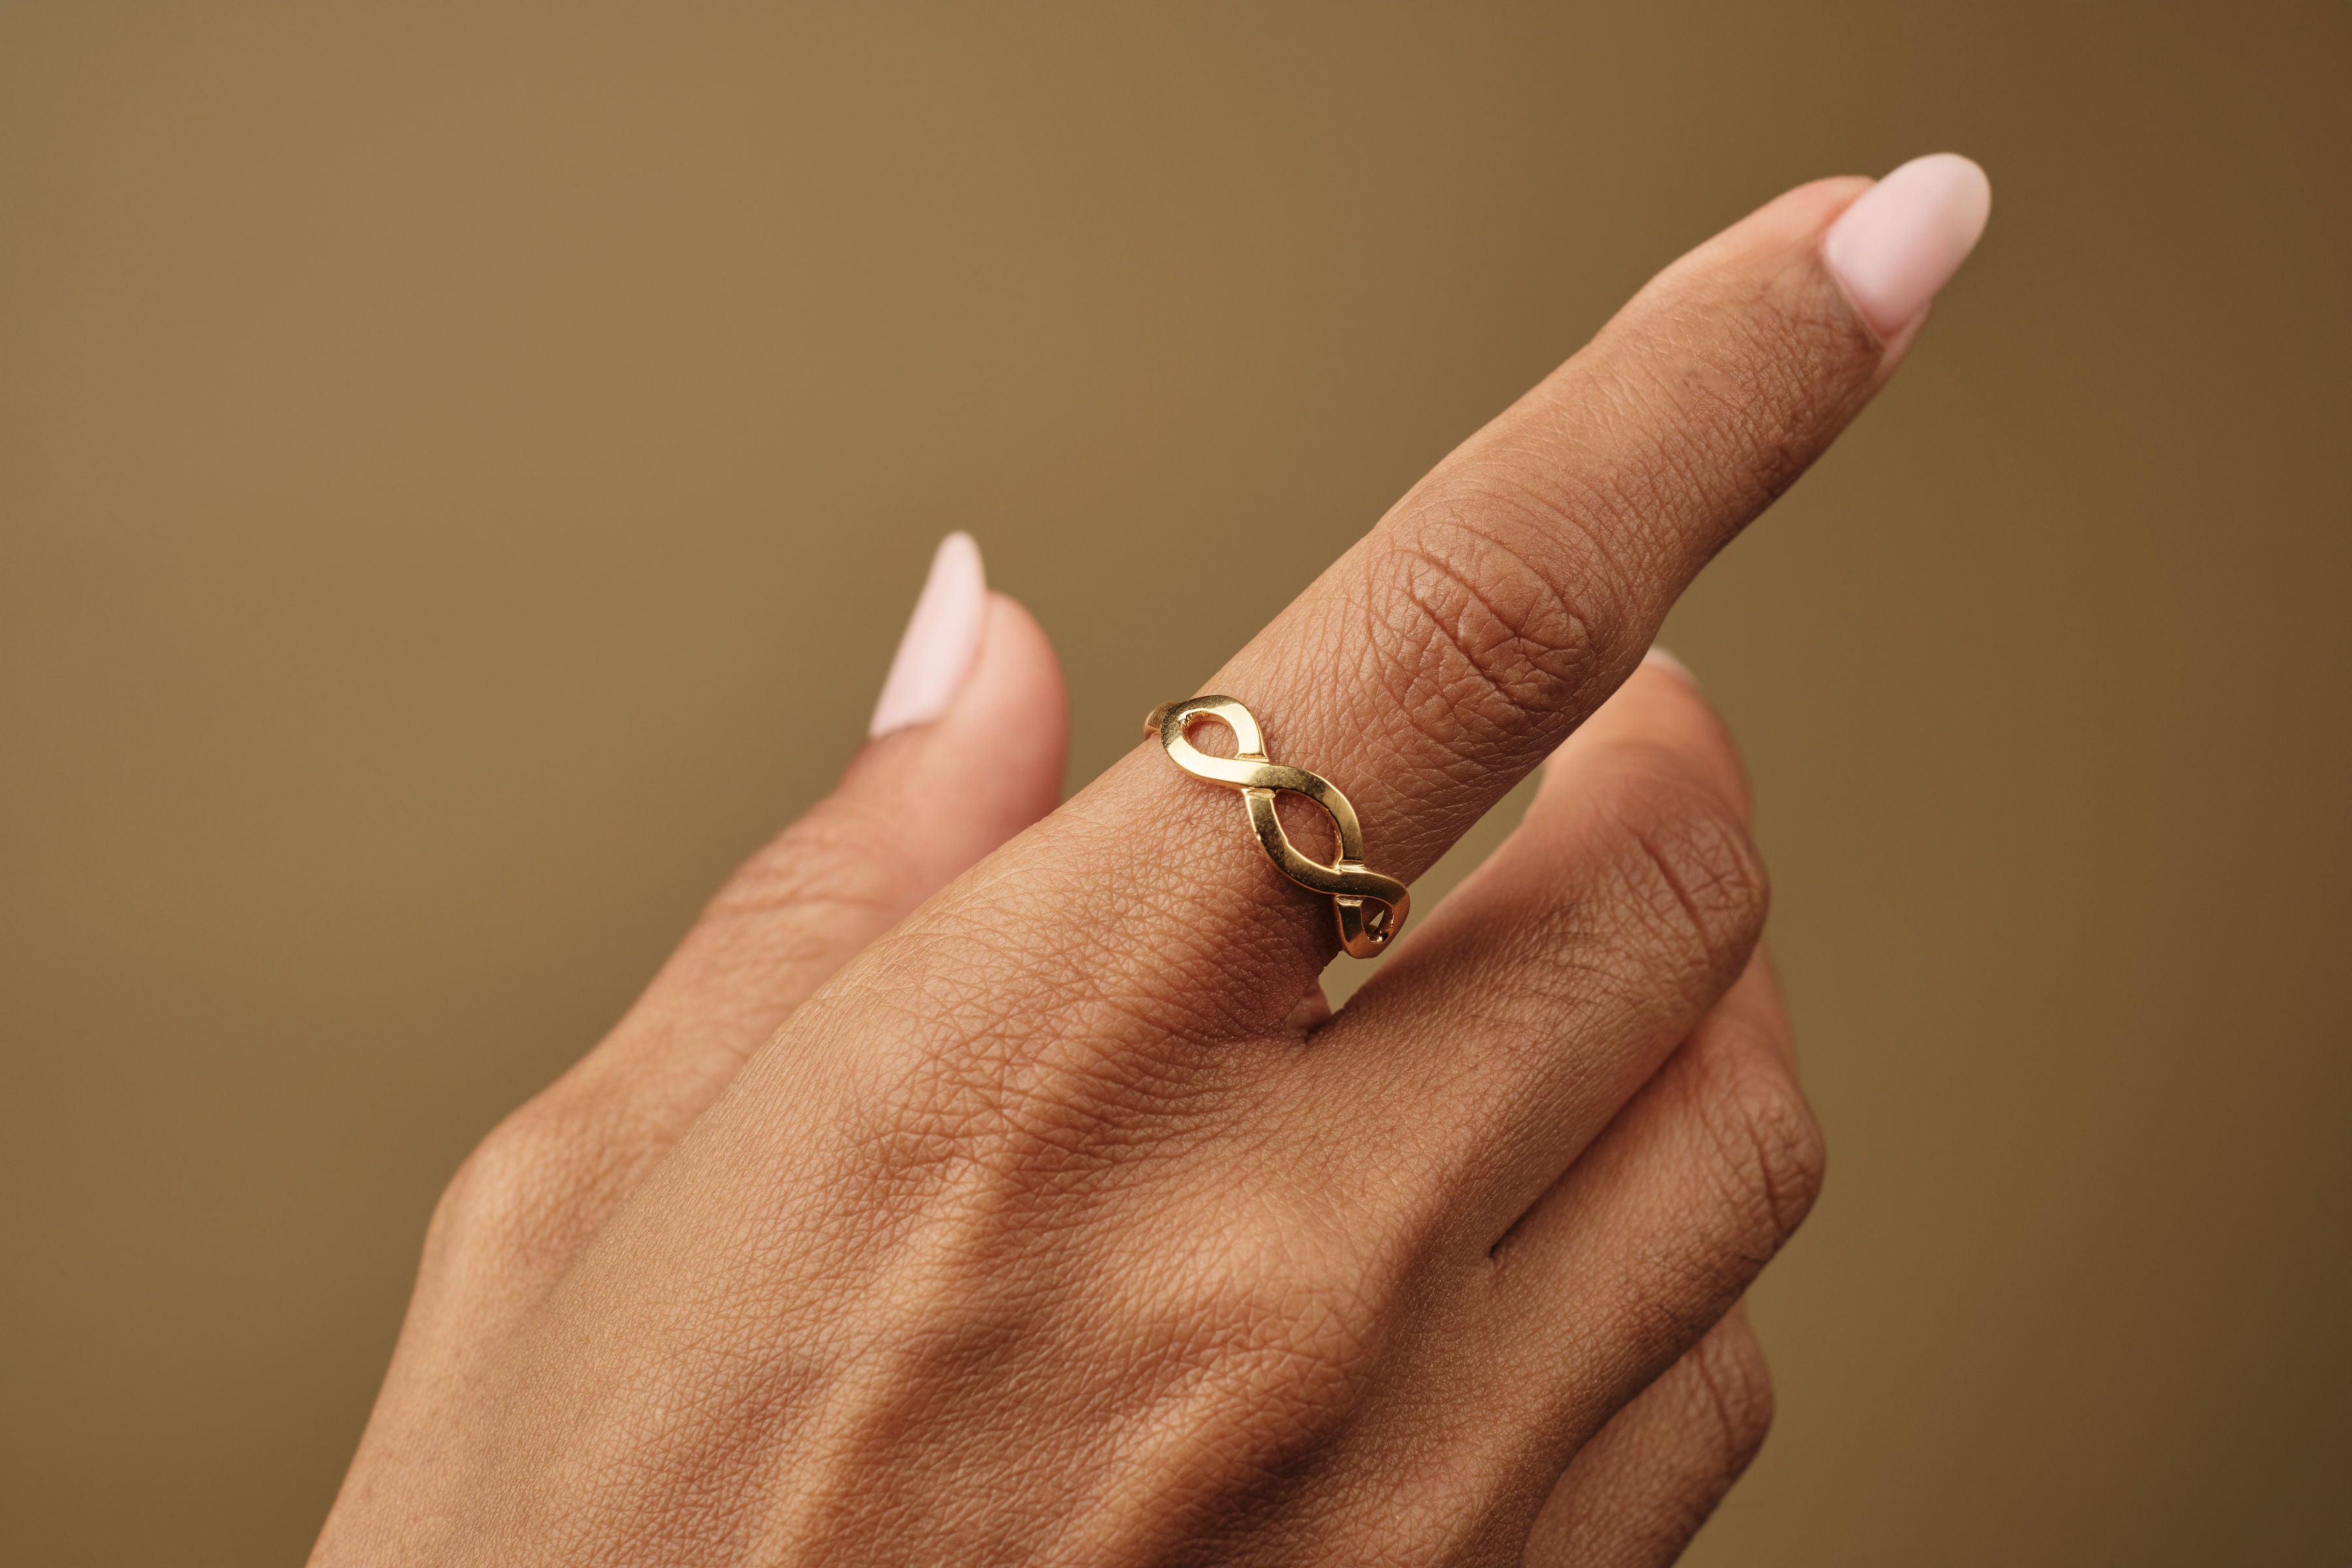 Bianca 18K Gold Vermeil Ring